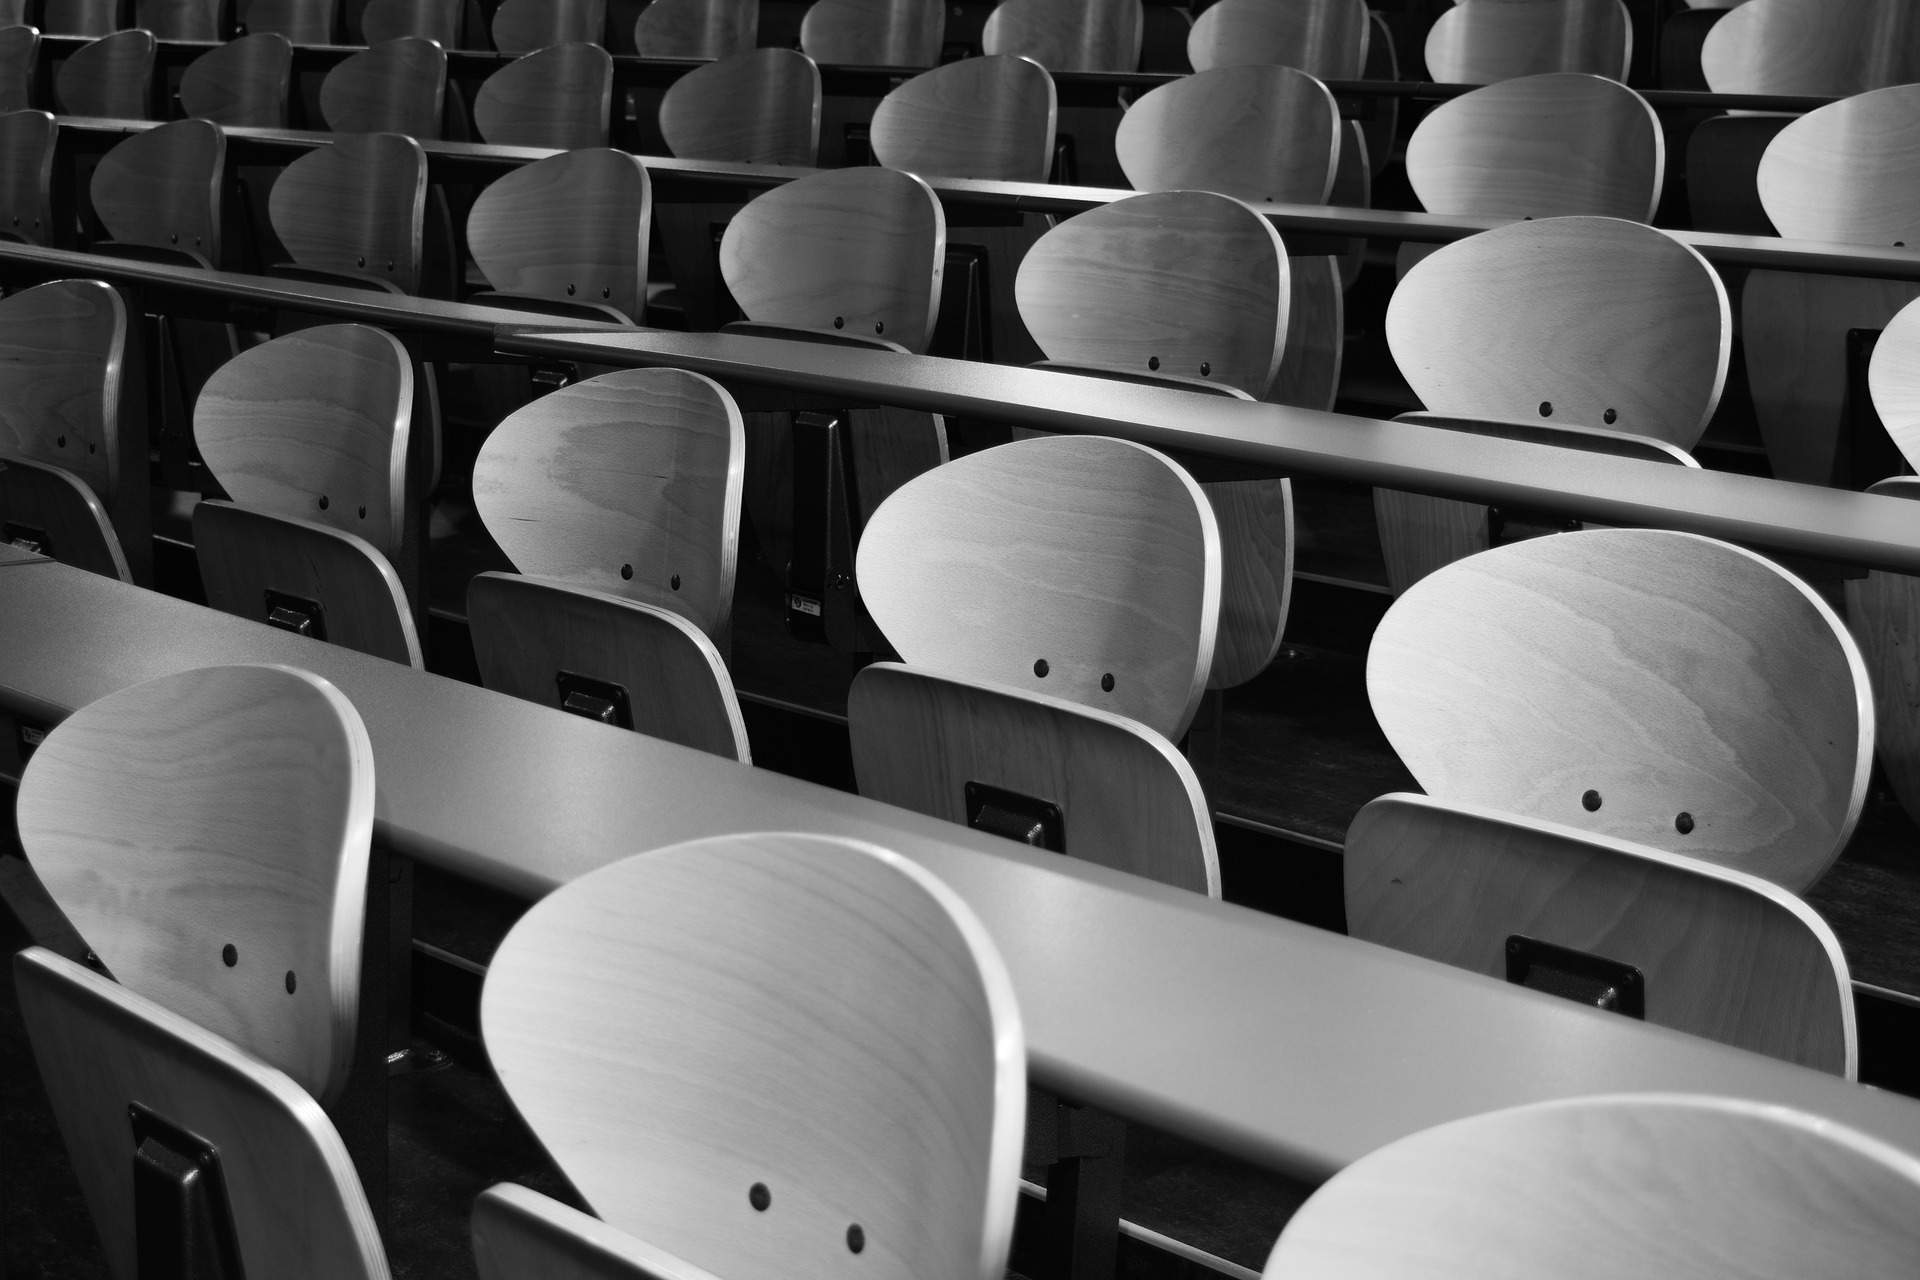 university, students, chairs, empty